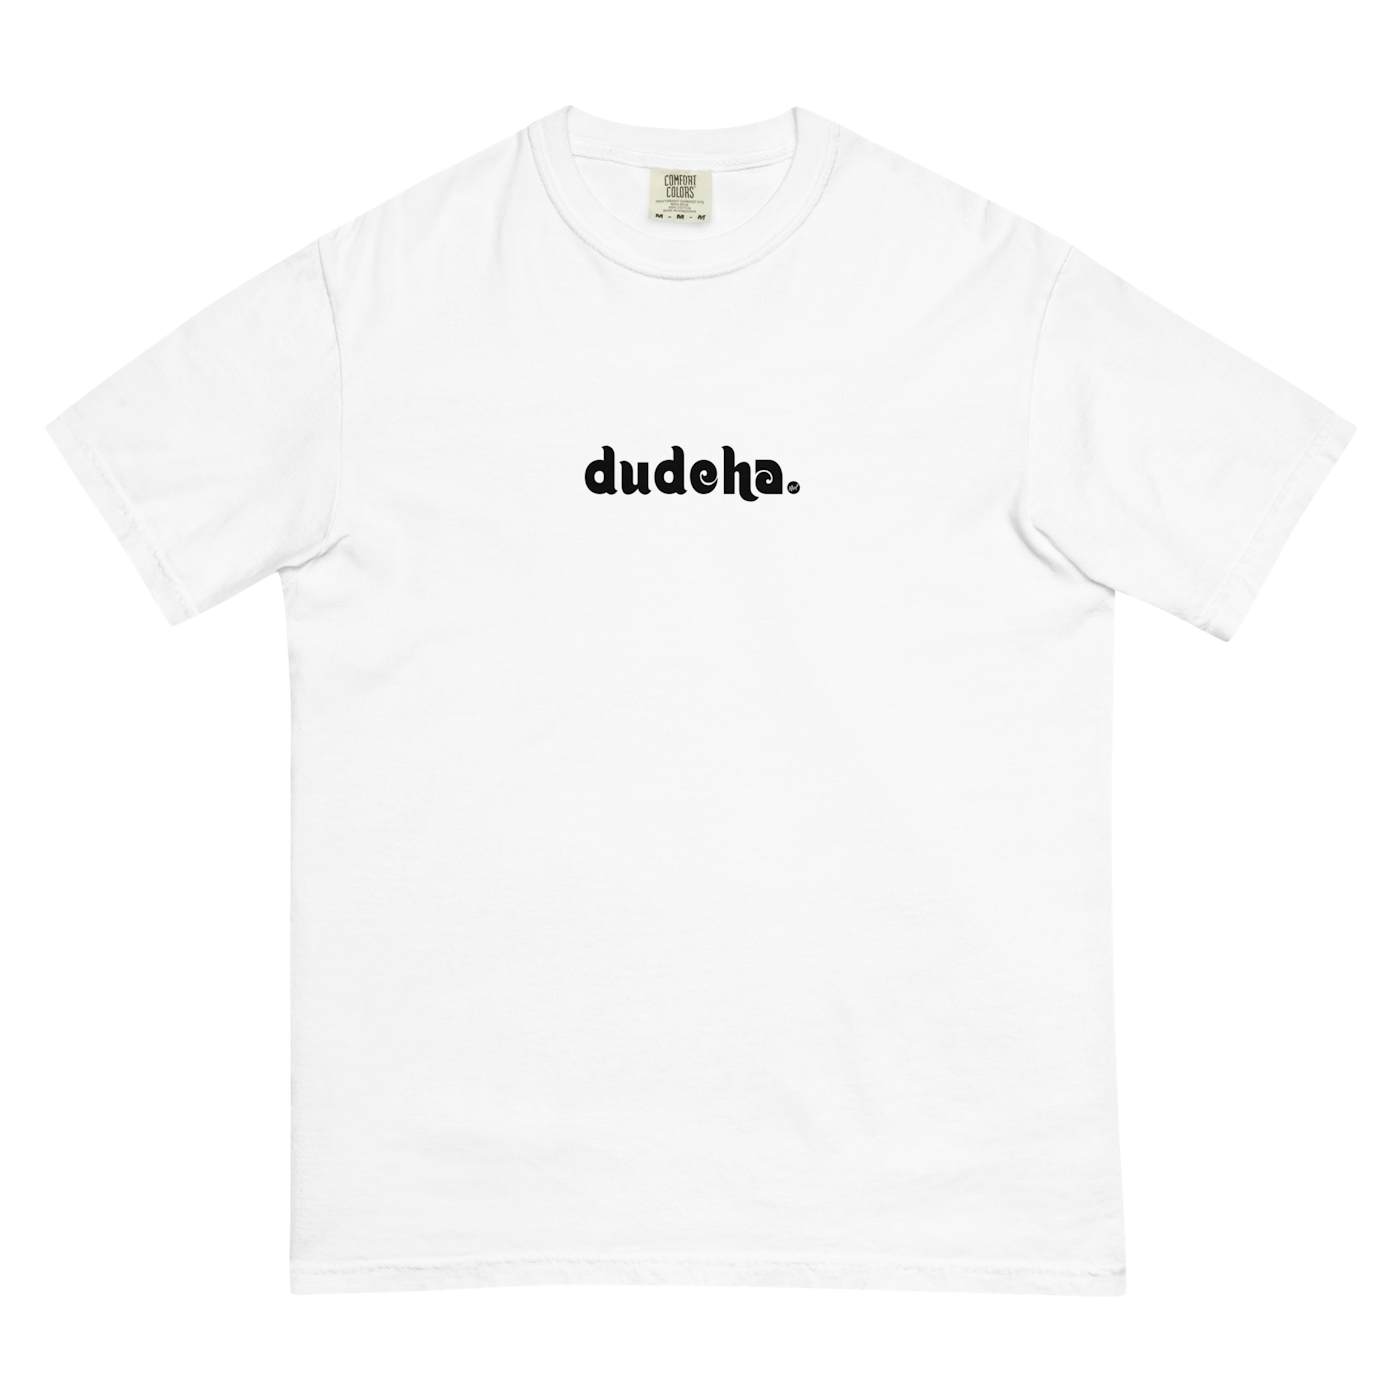 Coley Dudeha T-Shirt